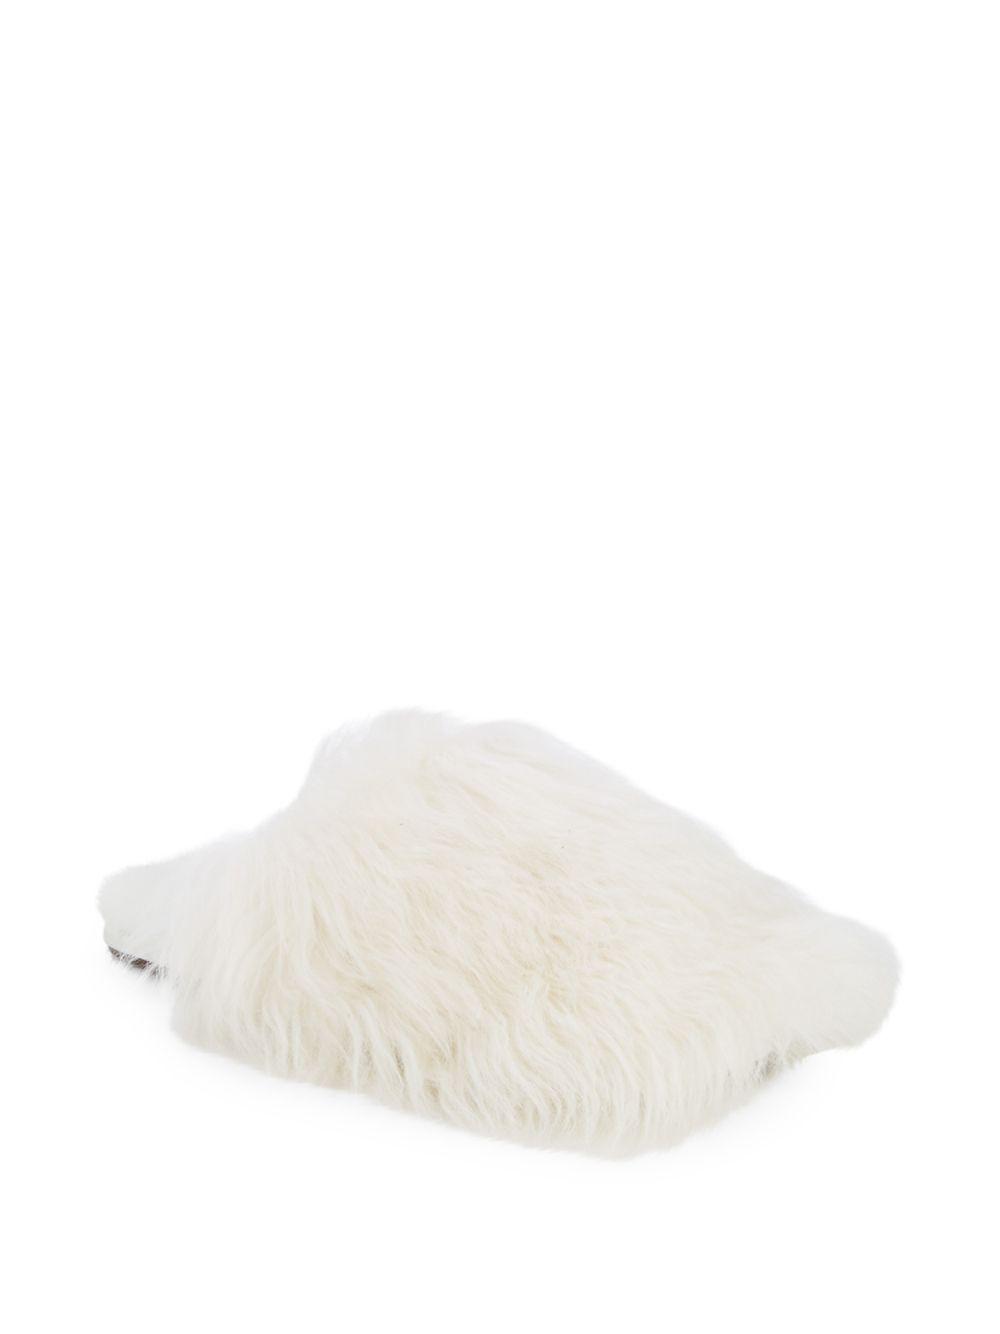 UGG Lamb Fur Slides in White - Lyst